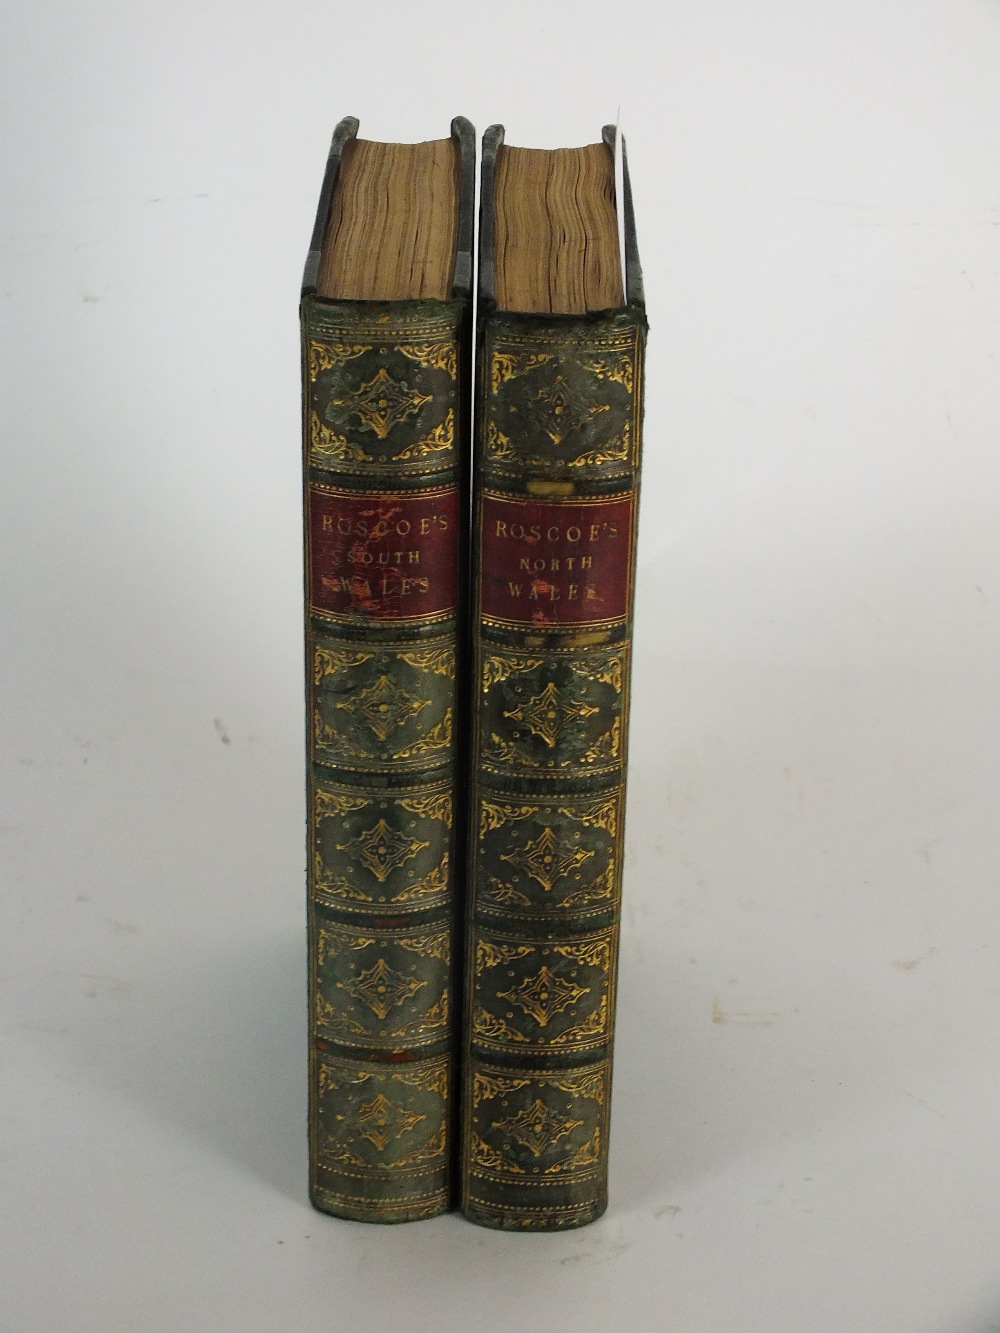 ROSCOE, Thomas, 'Wanderings and Excursions in North Wales/South Wales, 2 vols, circa 1830,